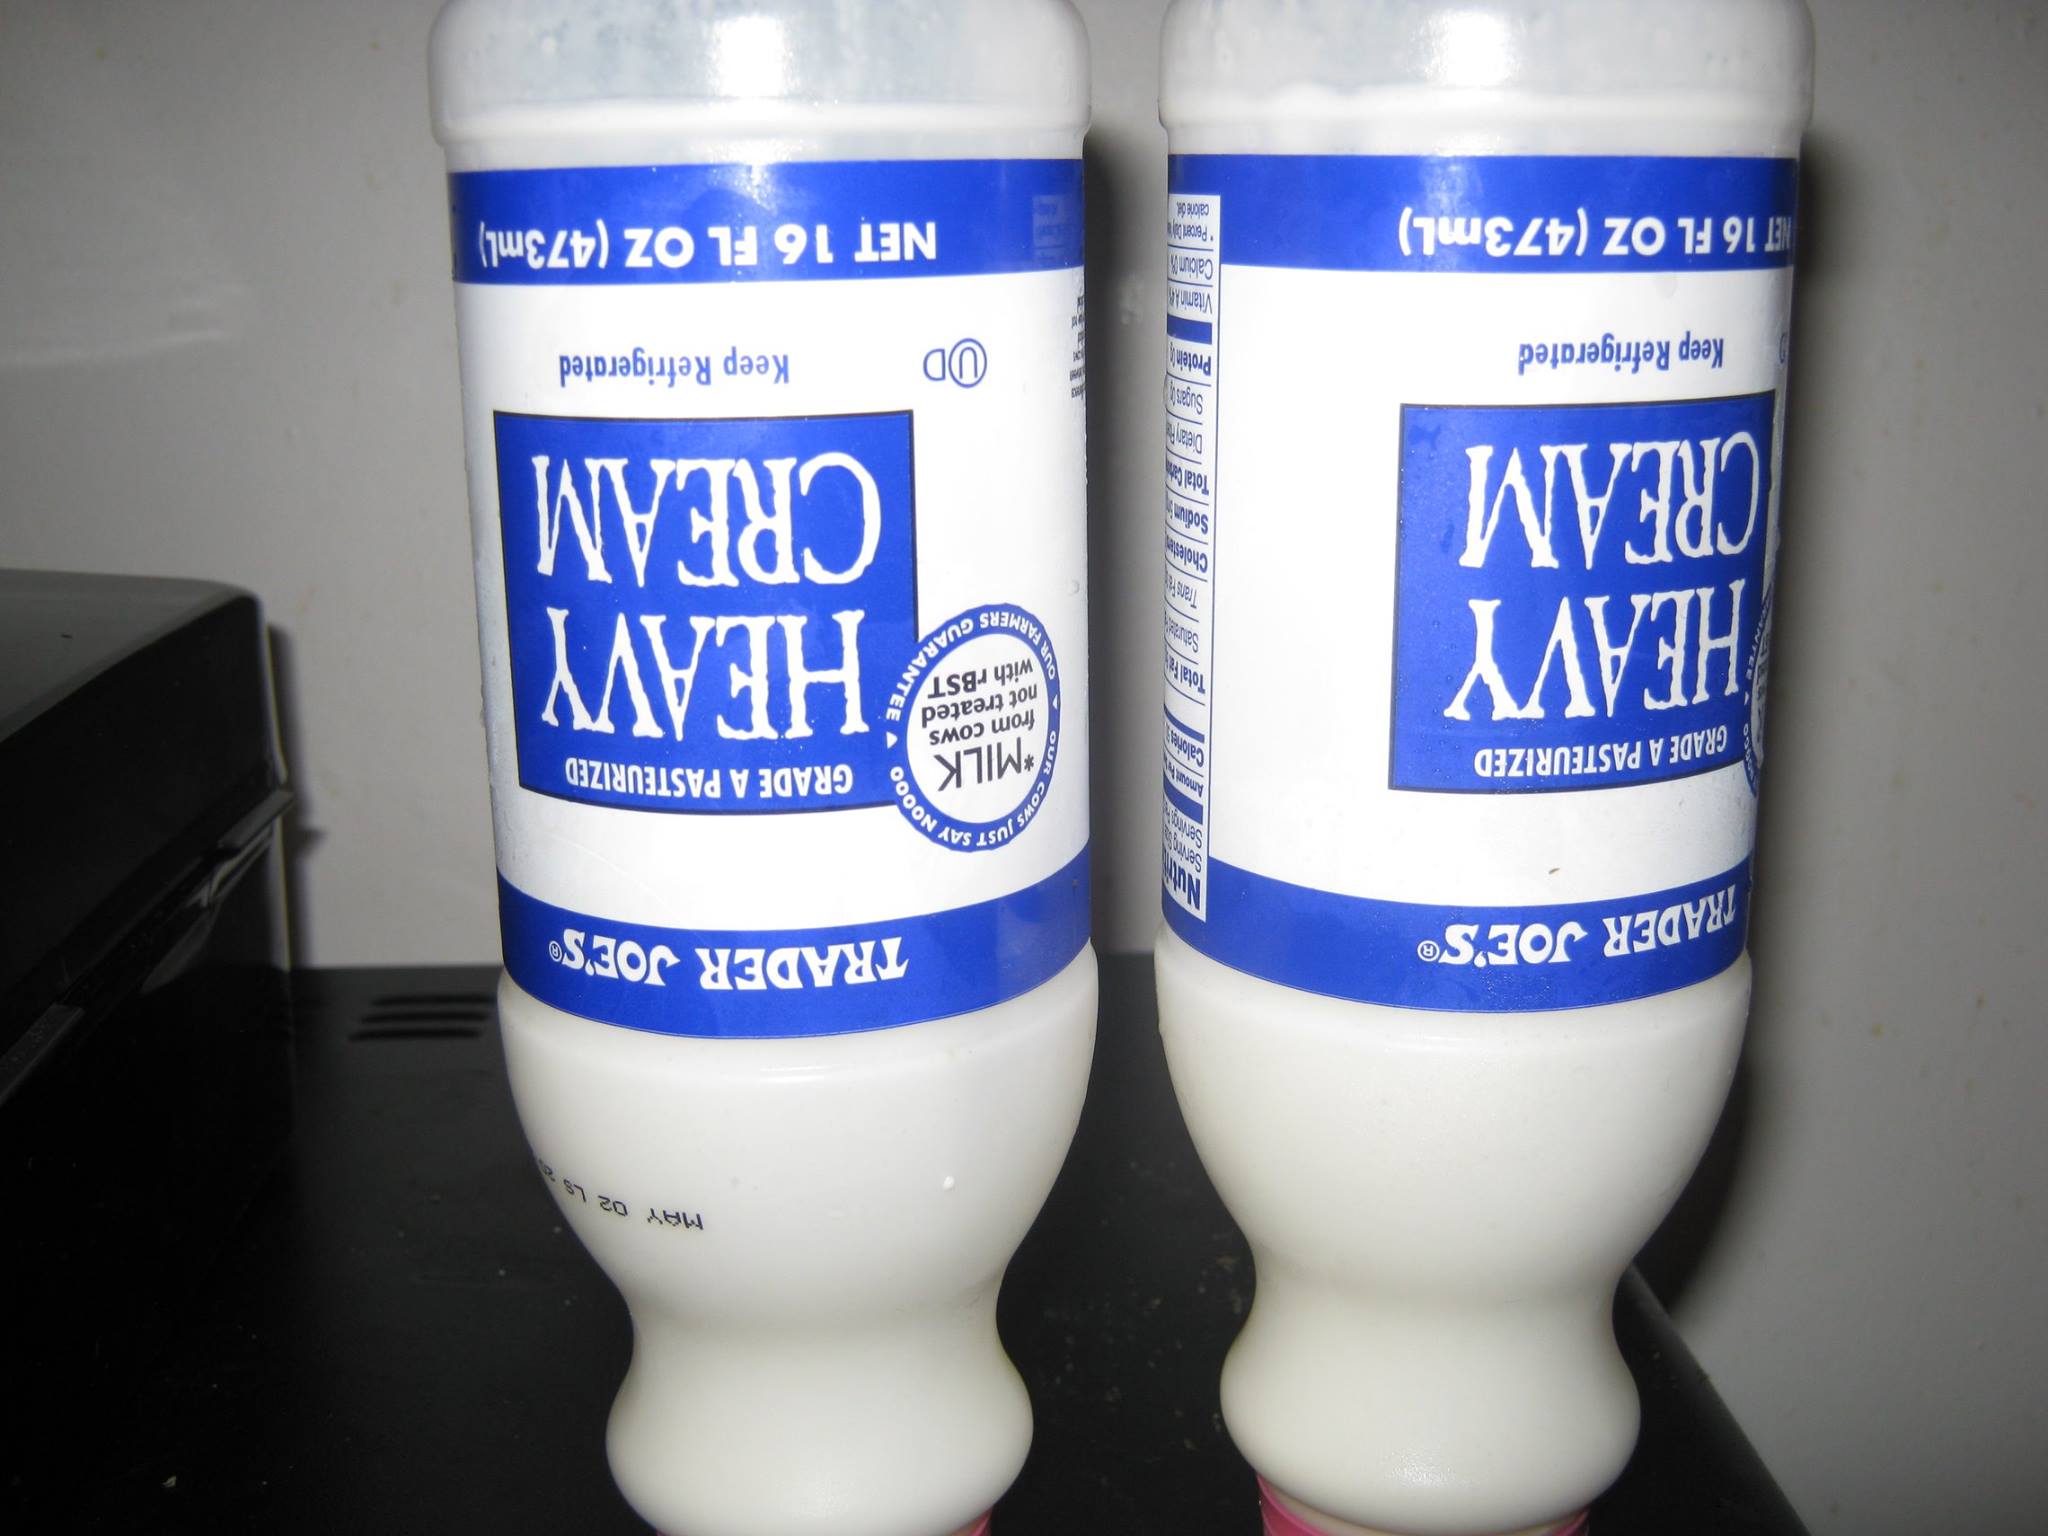 Two 16 oz bottles of heavy cream